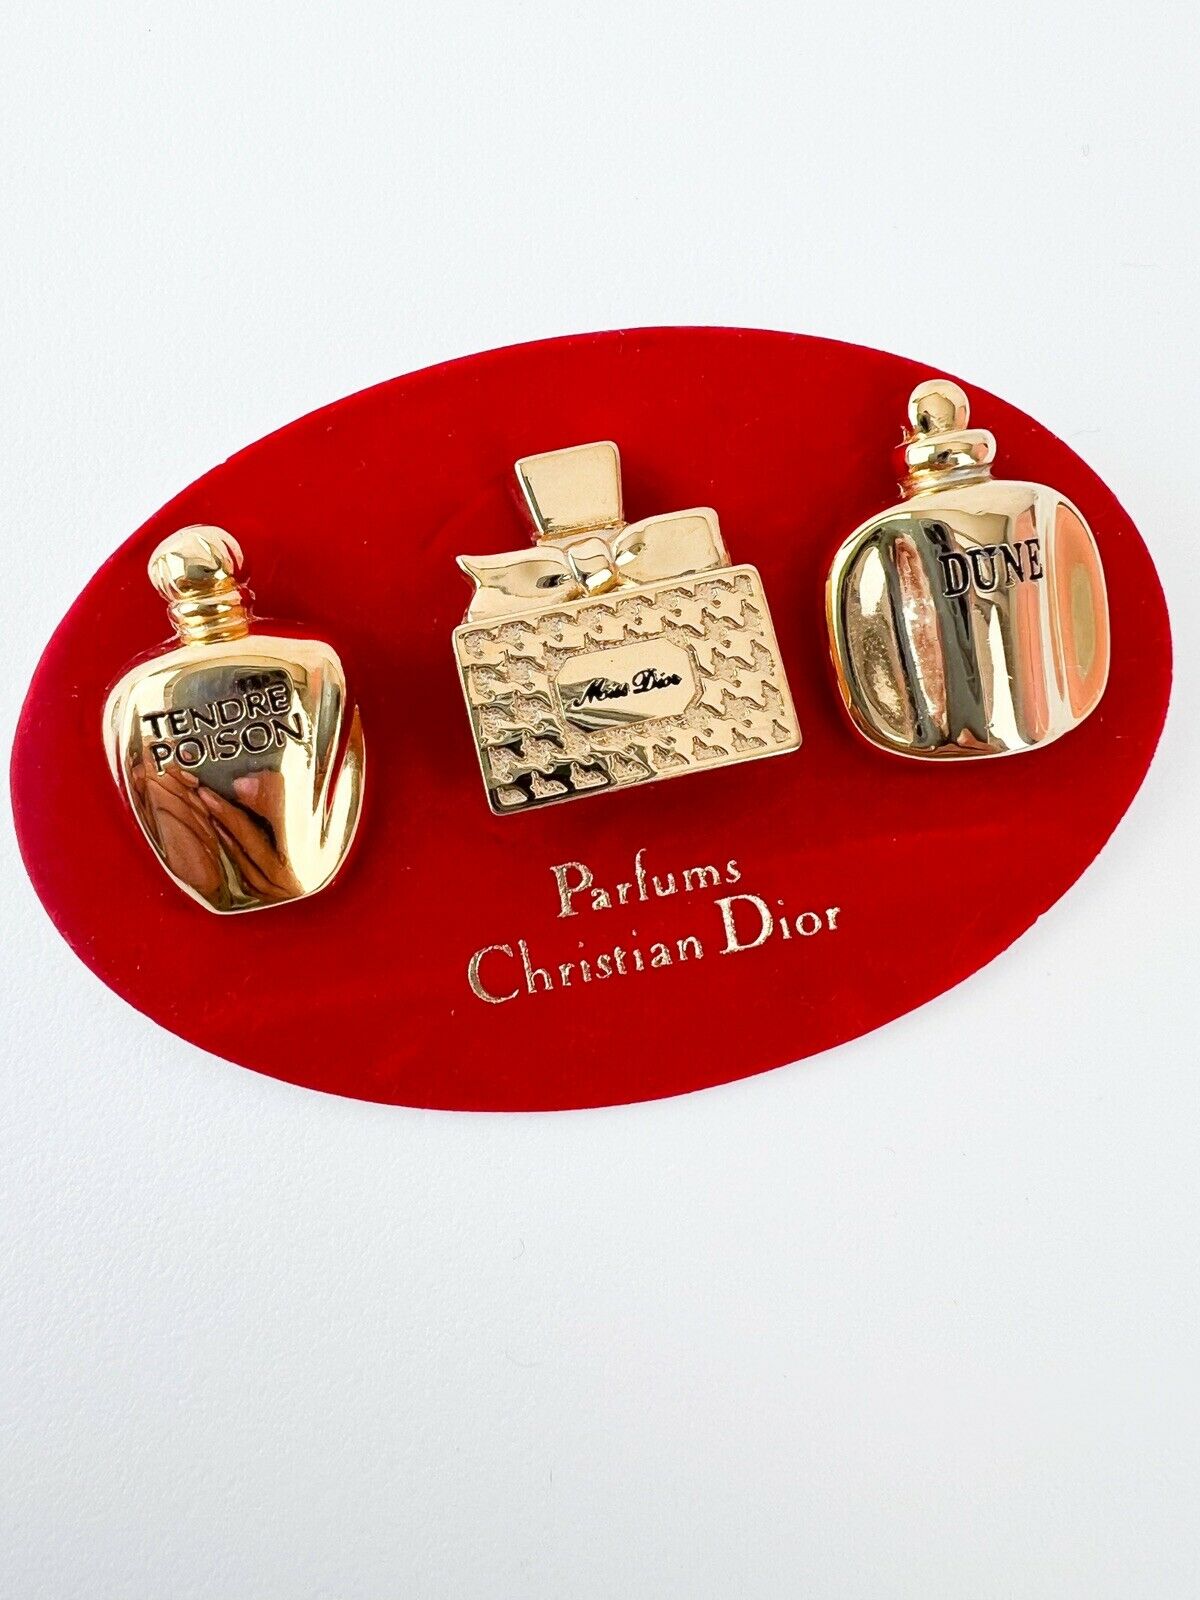 Vintage Christian Dior Parfums brooch